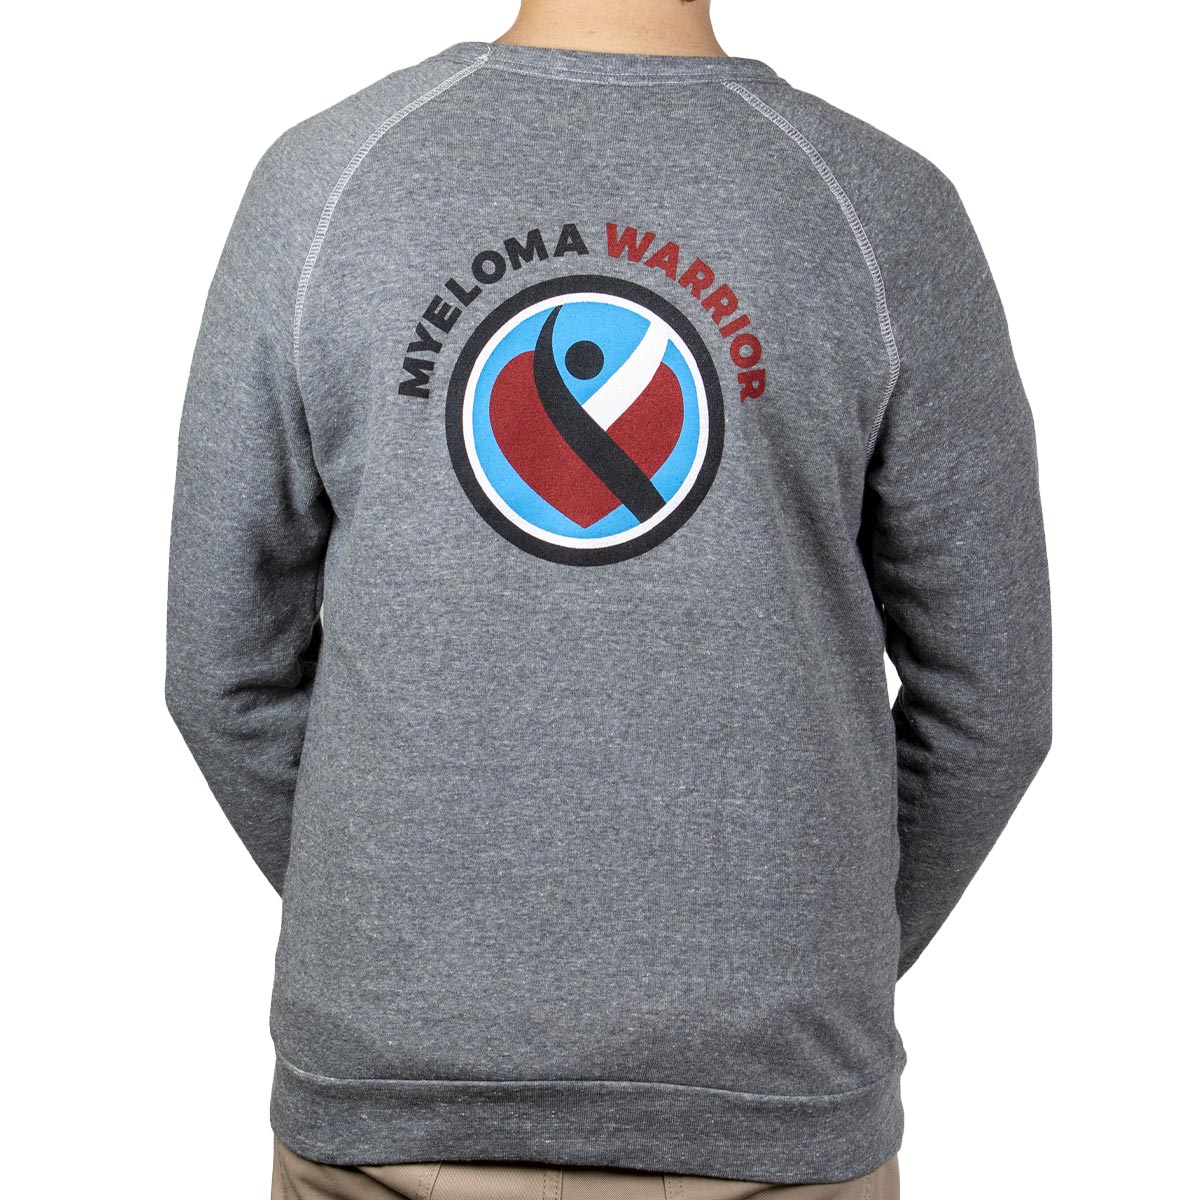 IMF Myeloma Warrior Crew Sweatshirt - Dark Grey